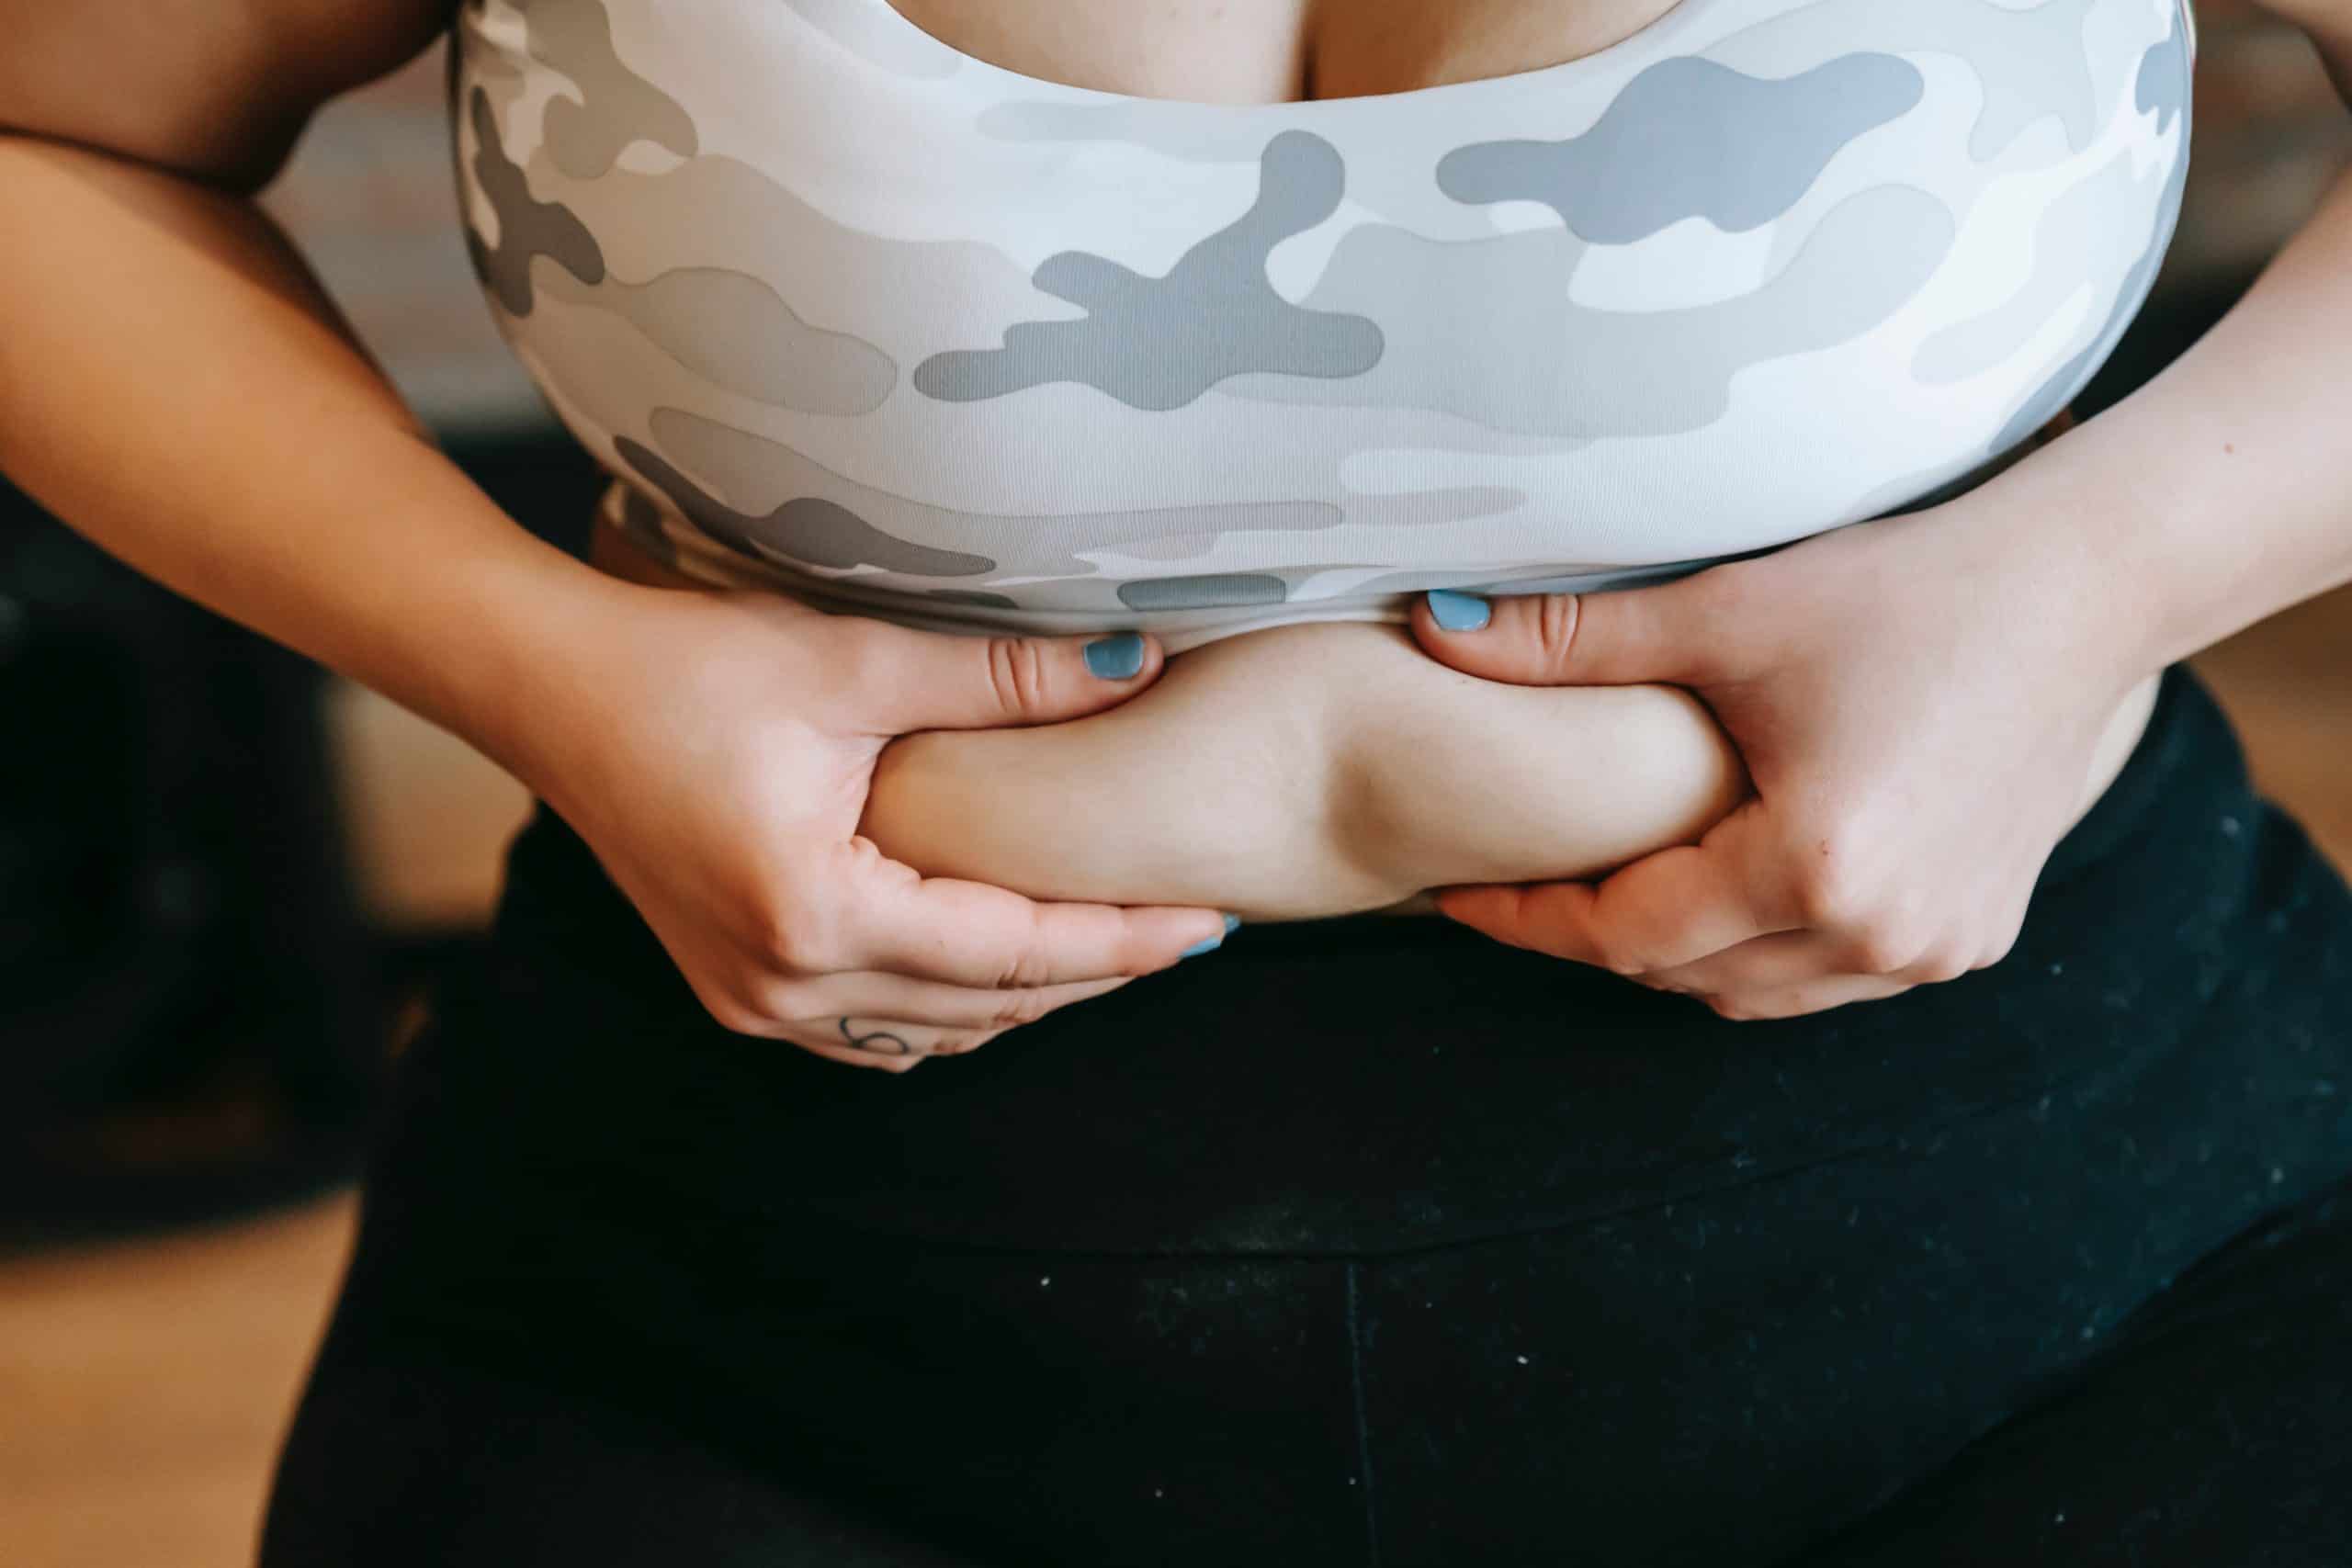 Average Women With Big Bellies